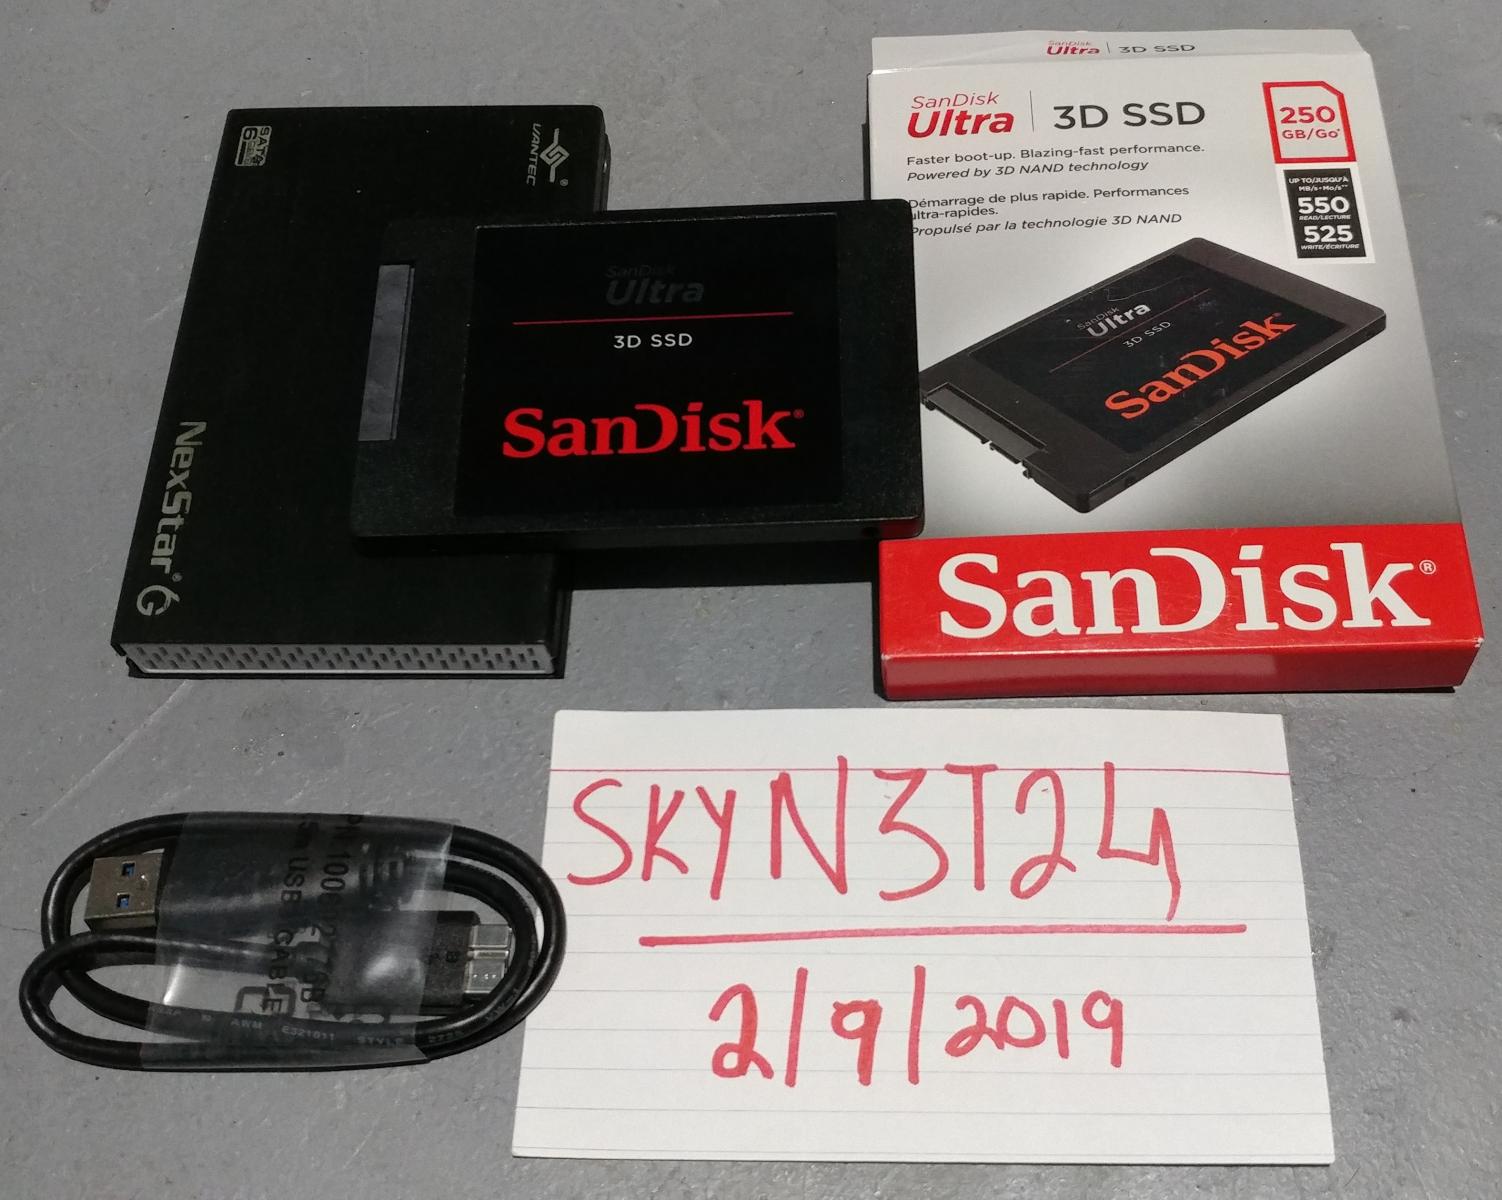 For sale SanDisk 3D Ultra 250GB 2.5